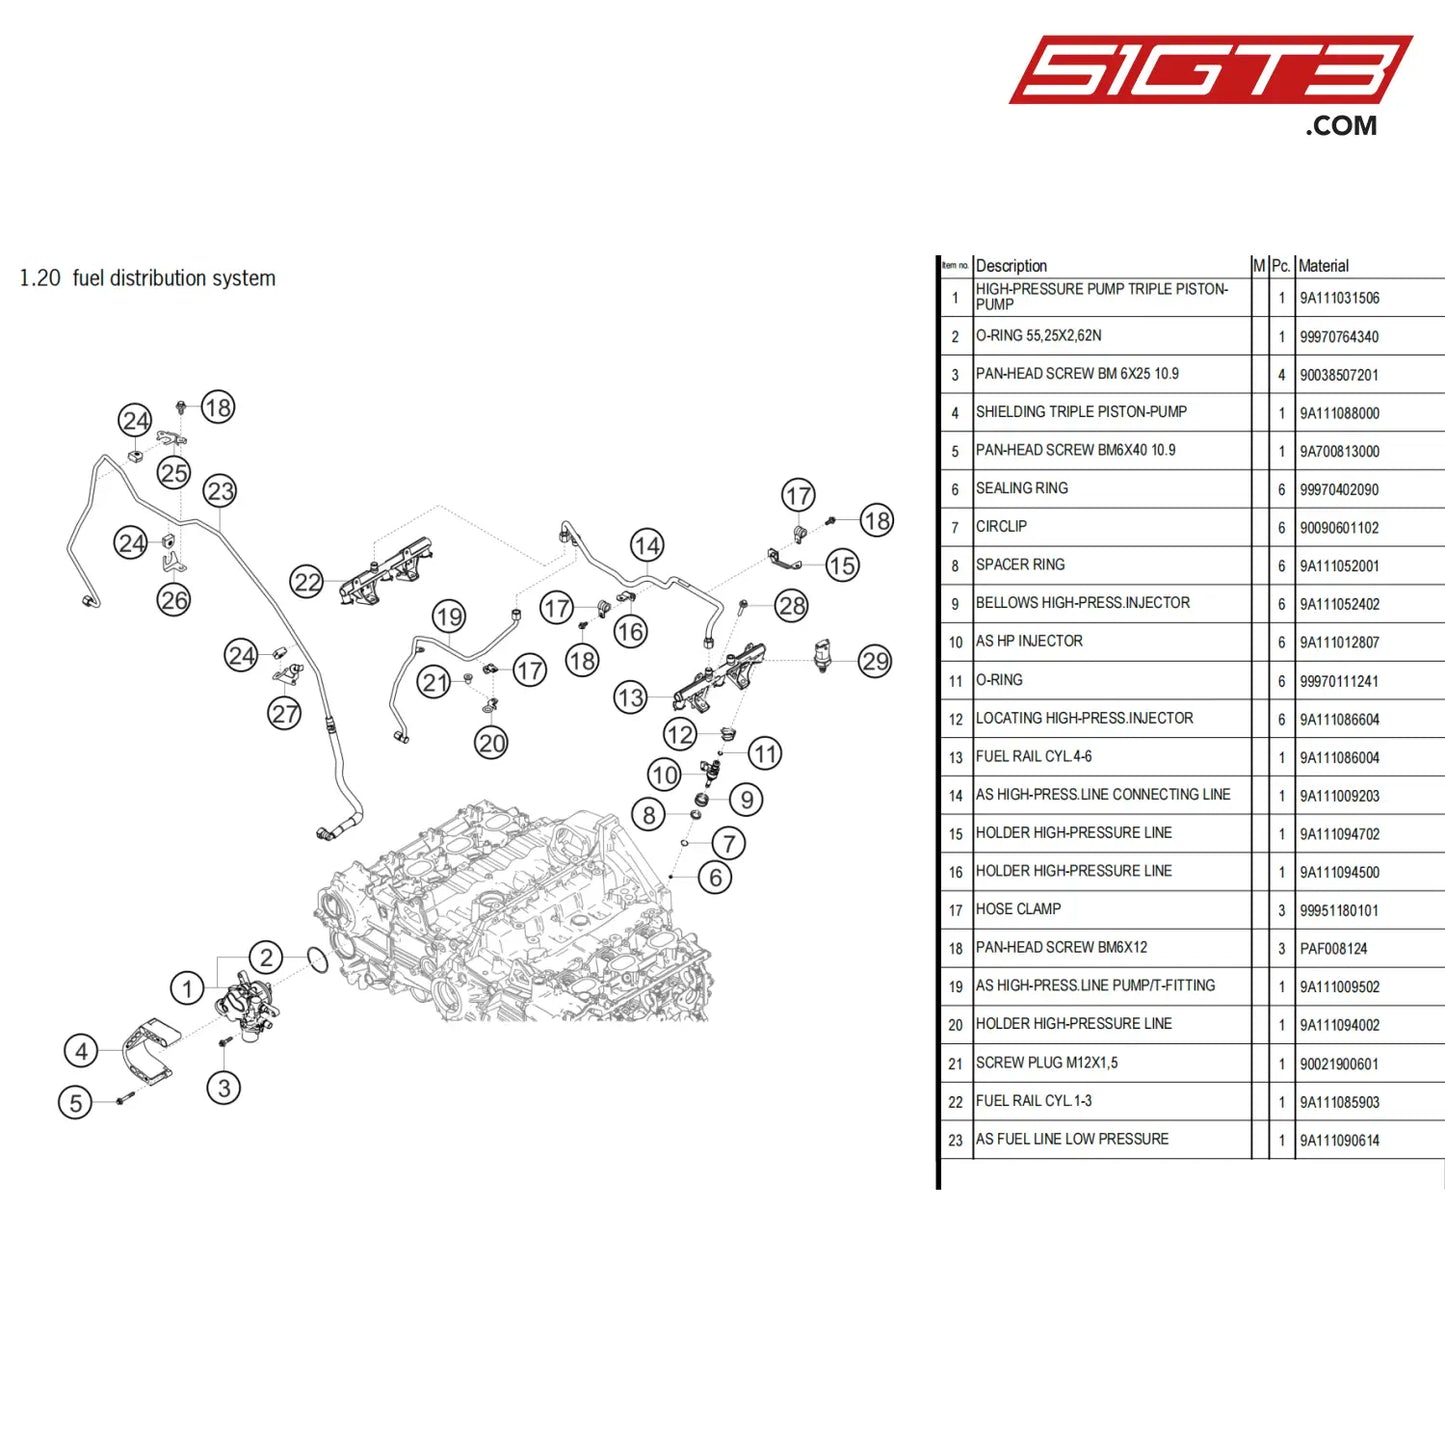 Sealing Ring - 99970402090 [Porsche 718 Cayman Gt4 Clubsport] Fuel Distribution System